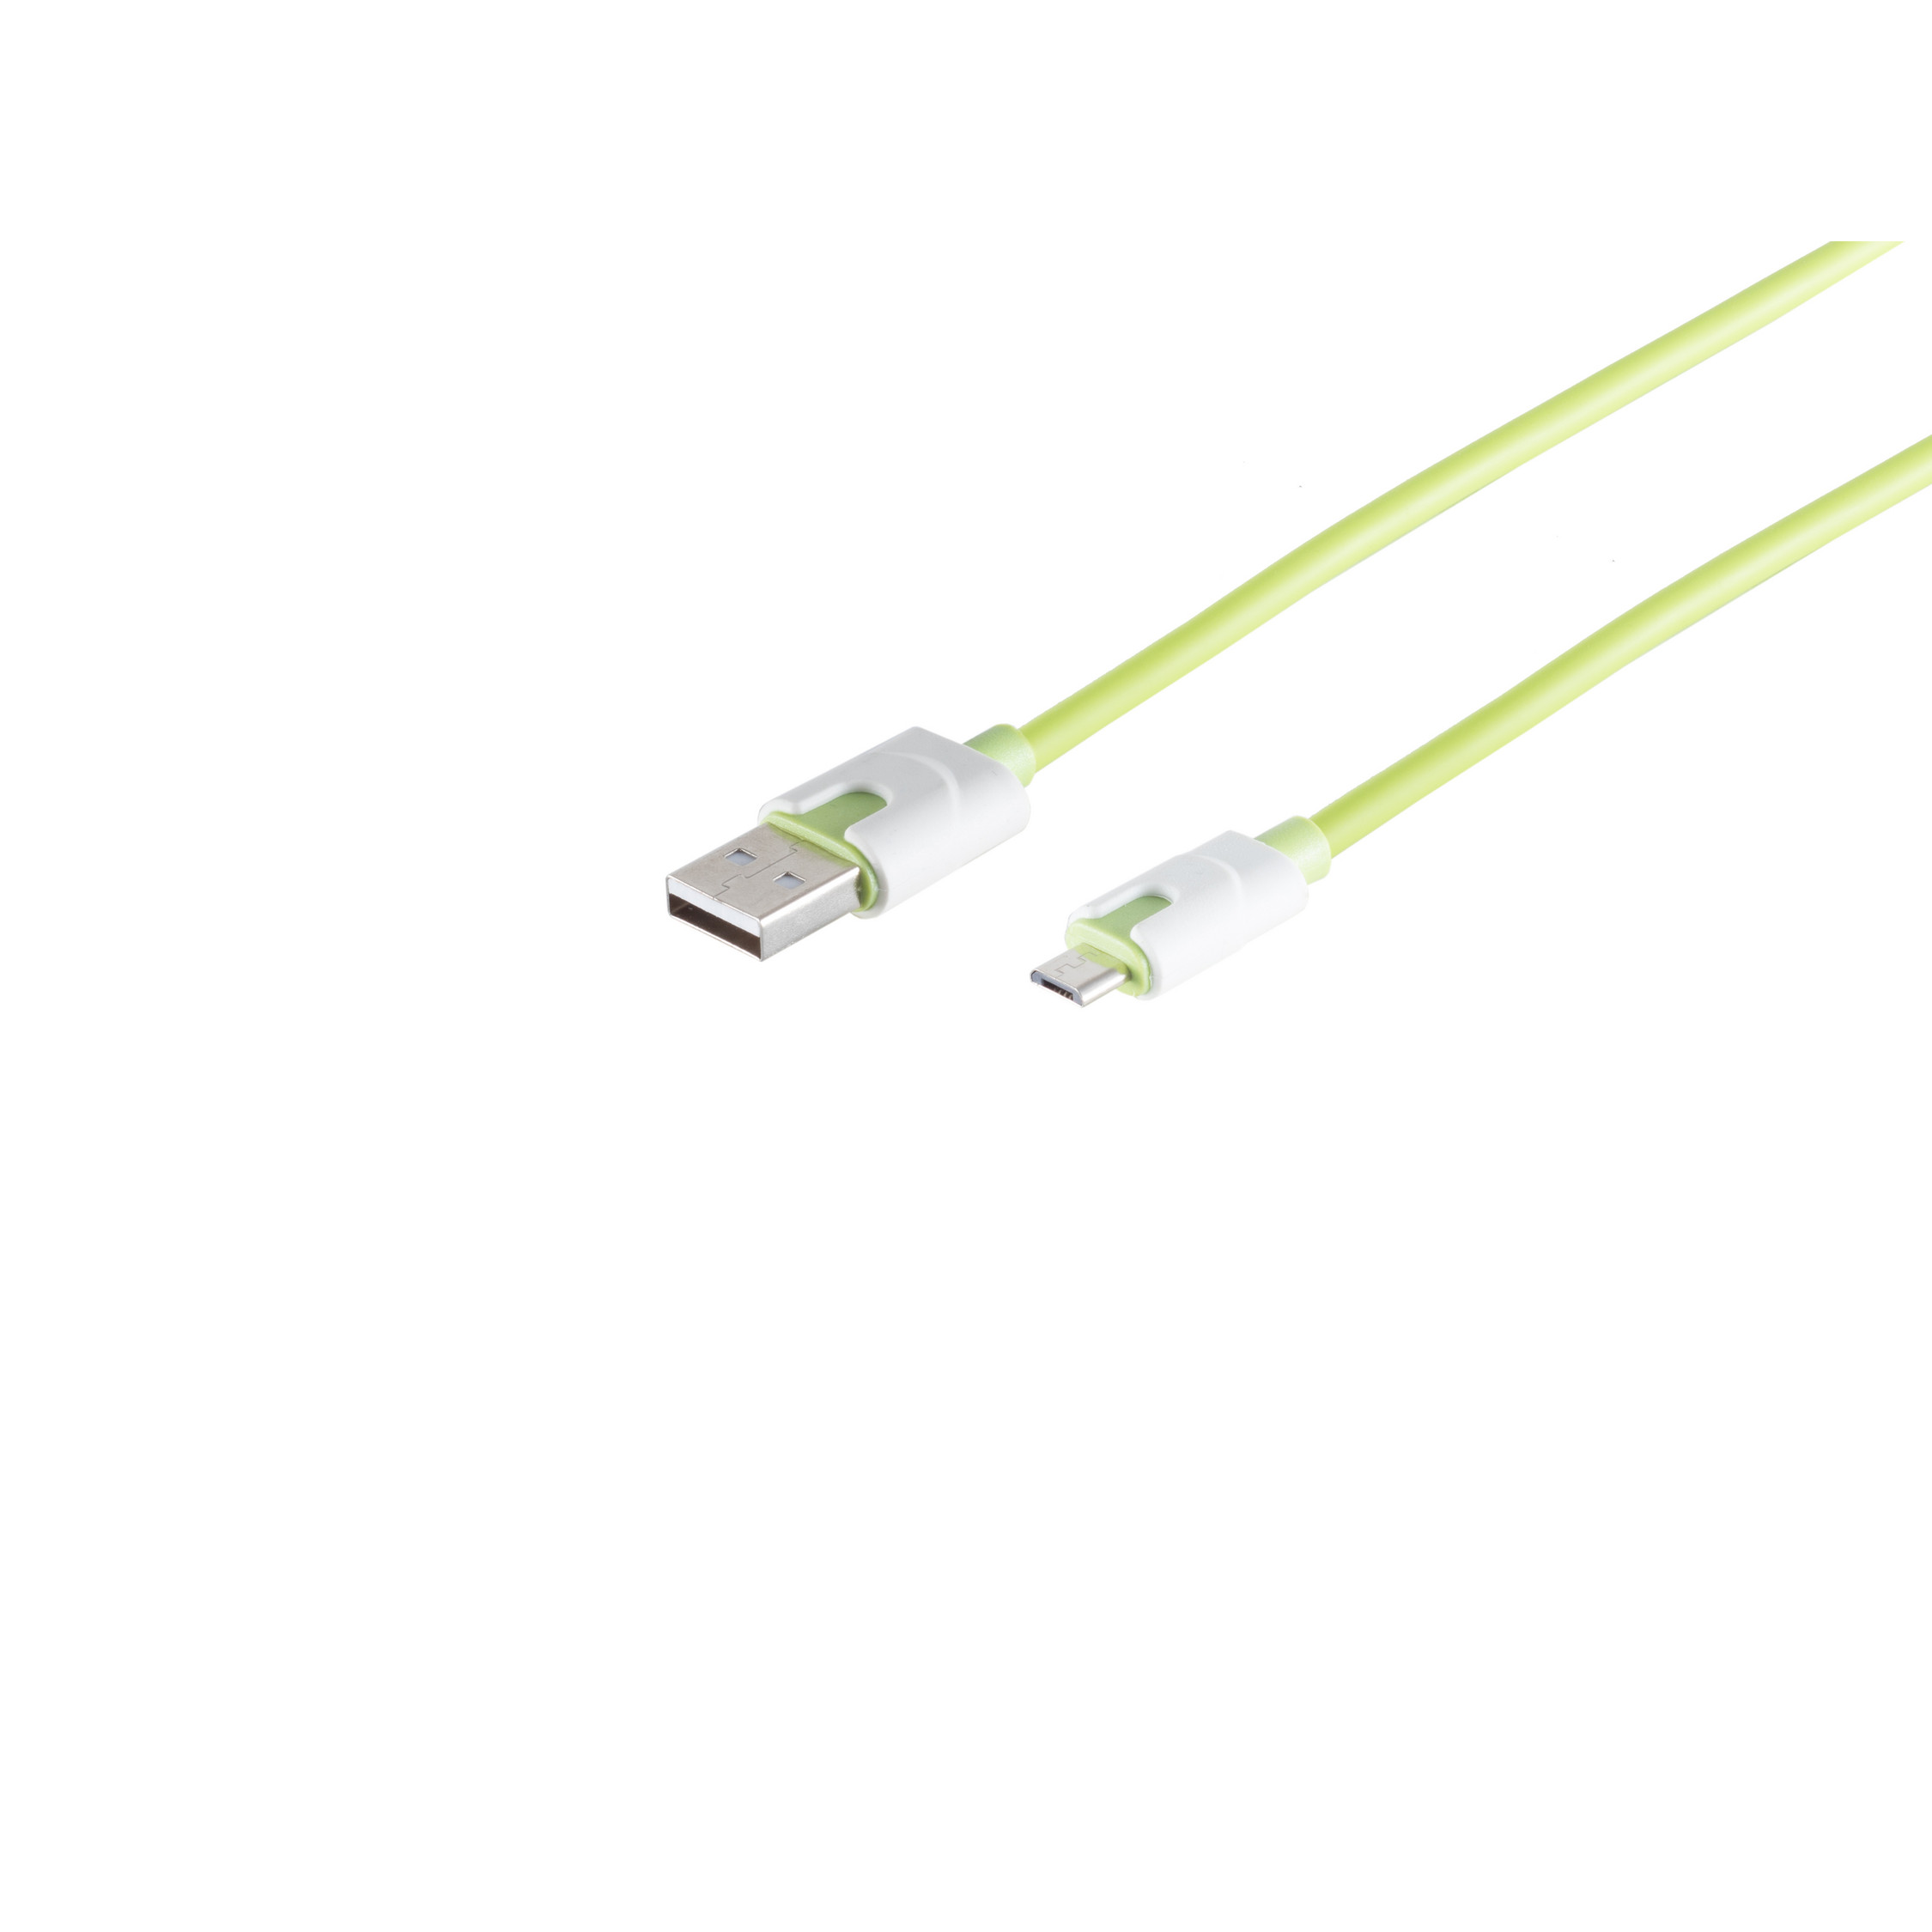 S/CONN MAXIMUM CONNECTIVITY Kabel USB-Ladekabel Micro Stecker 2m auf B, grün, USB A USB